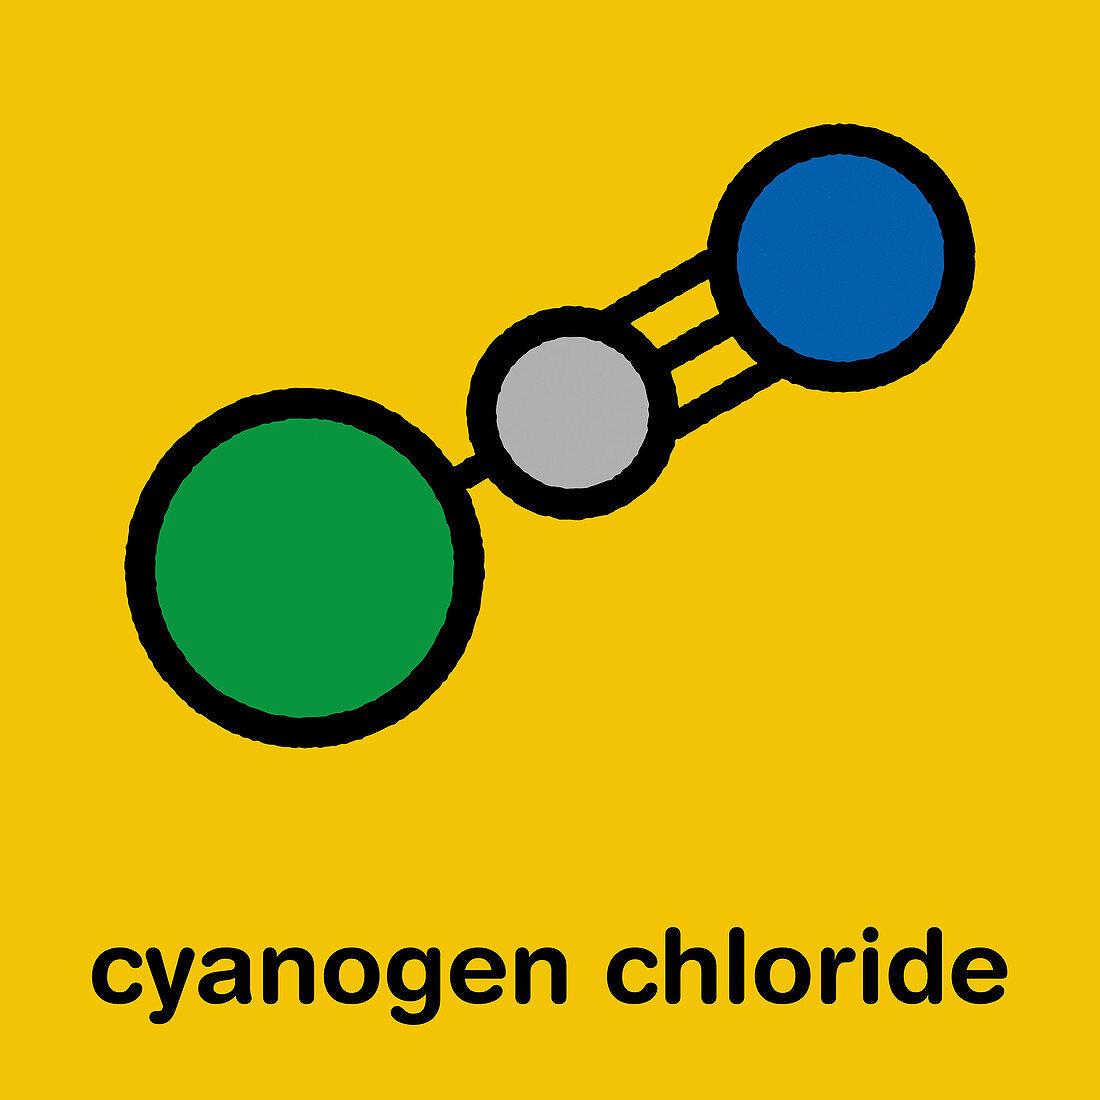 Cyanogen chloride toxic gas molecule